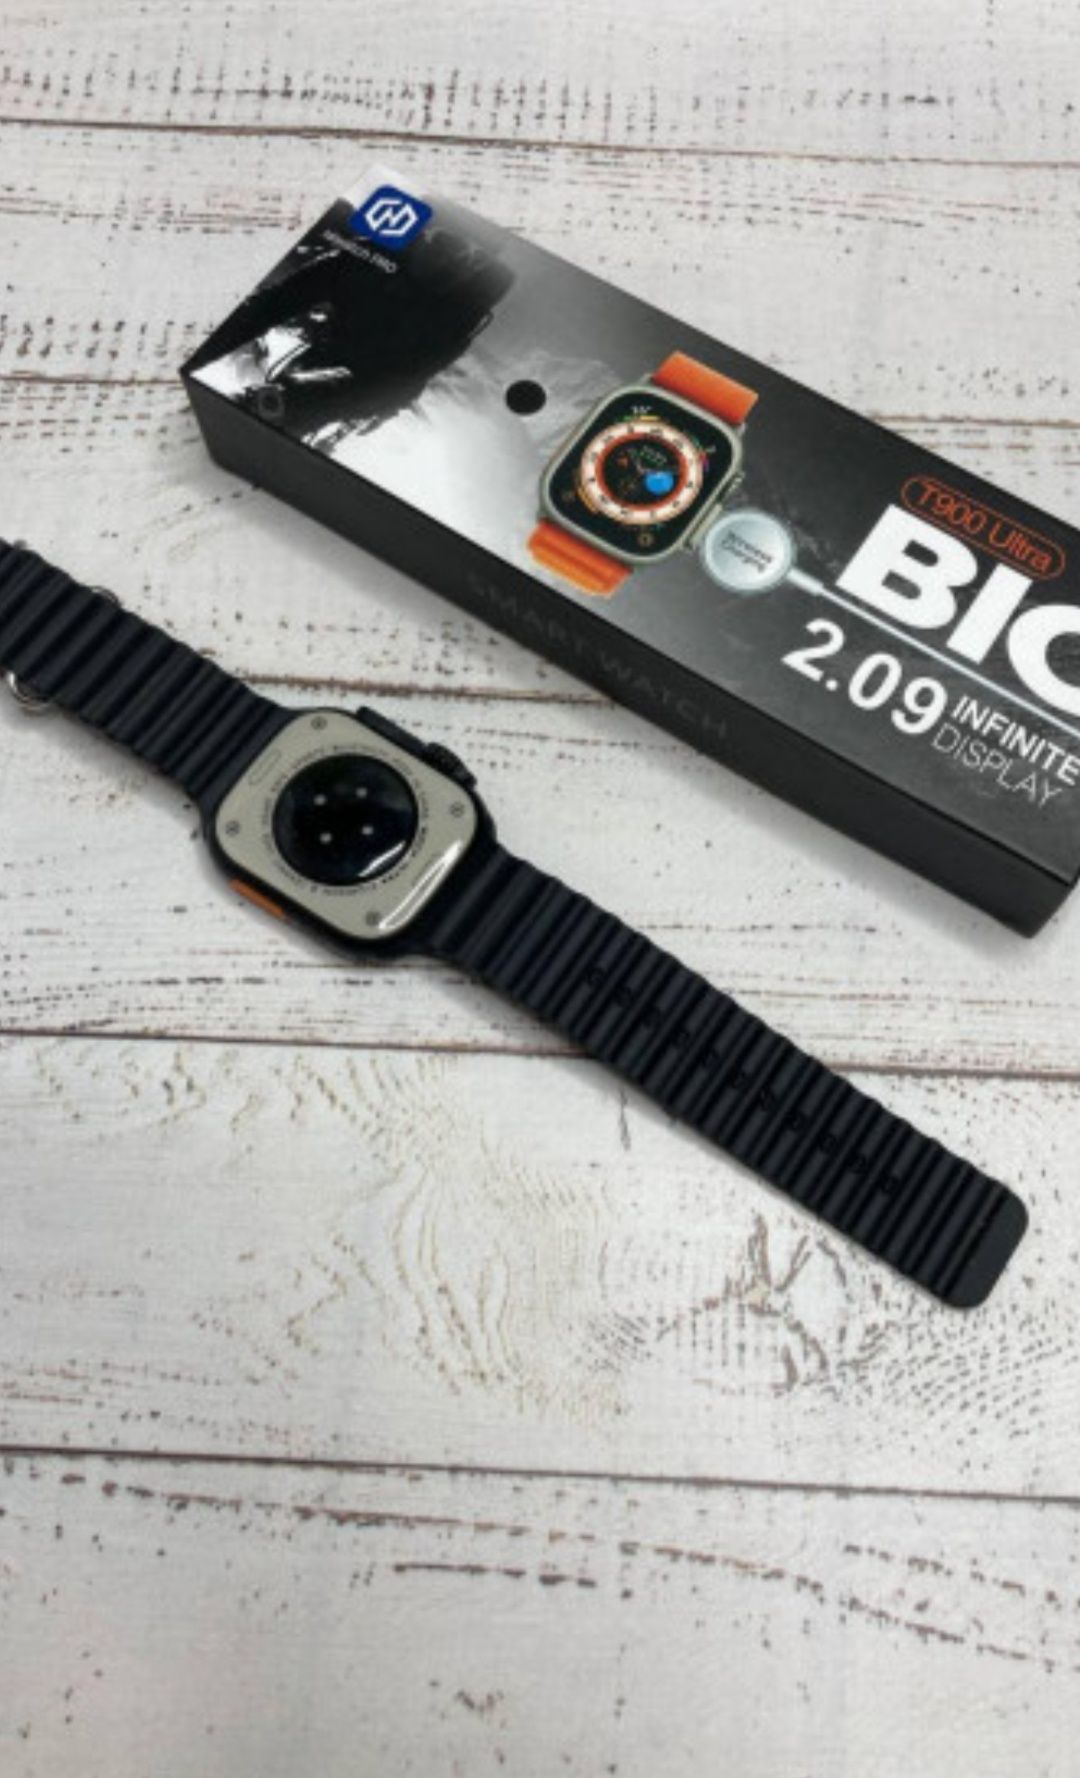 Умные смарт-часы Smart Watch T900 Ultra ULTRA